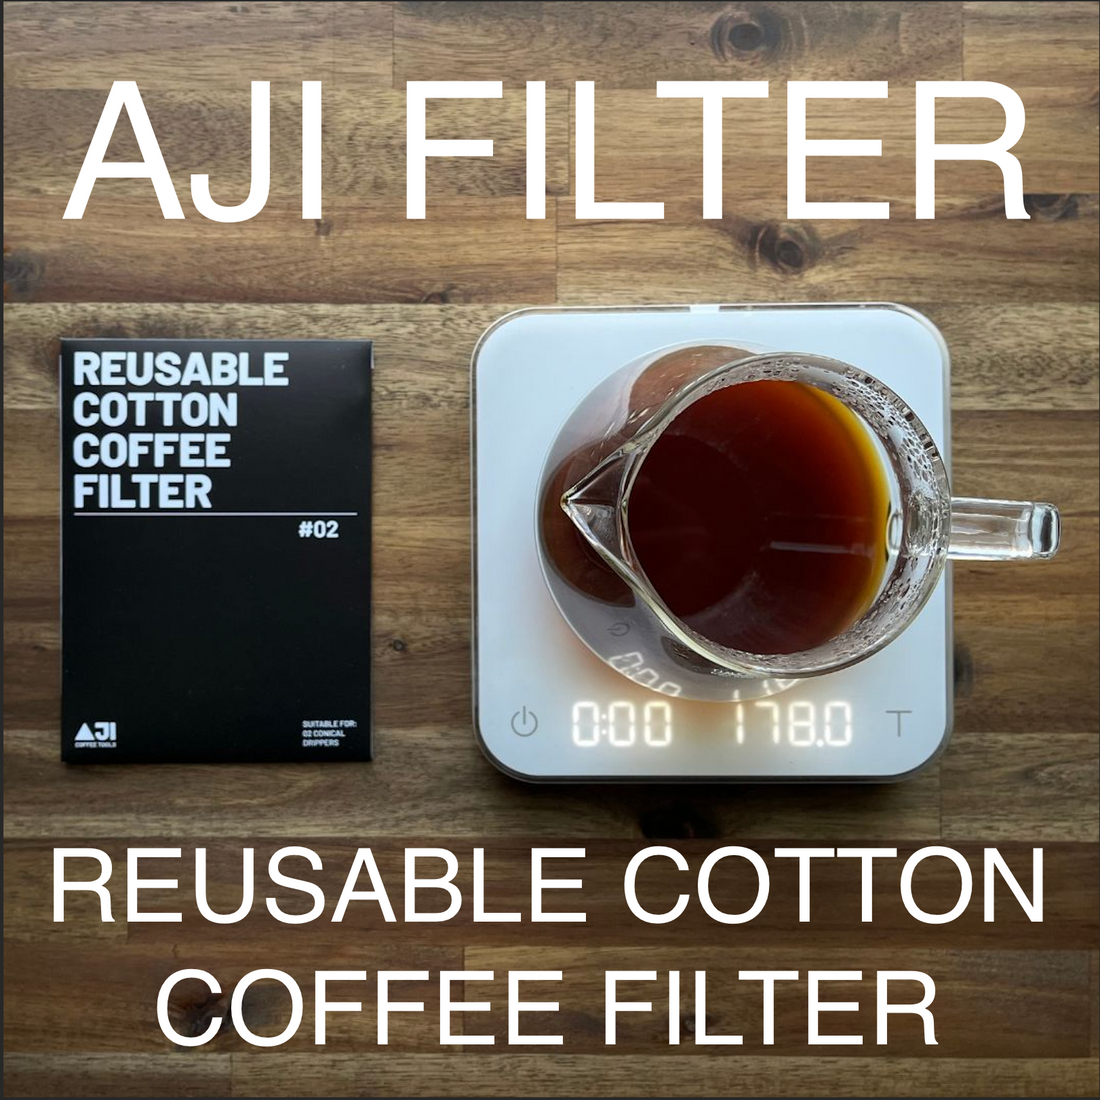 Aji Filter Reusable cotton coffee Filter